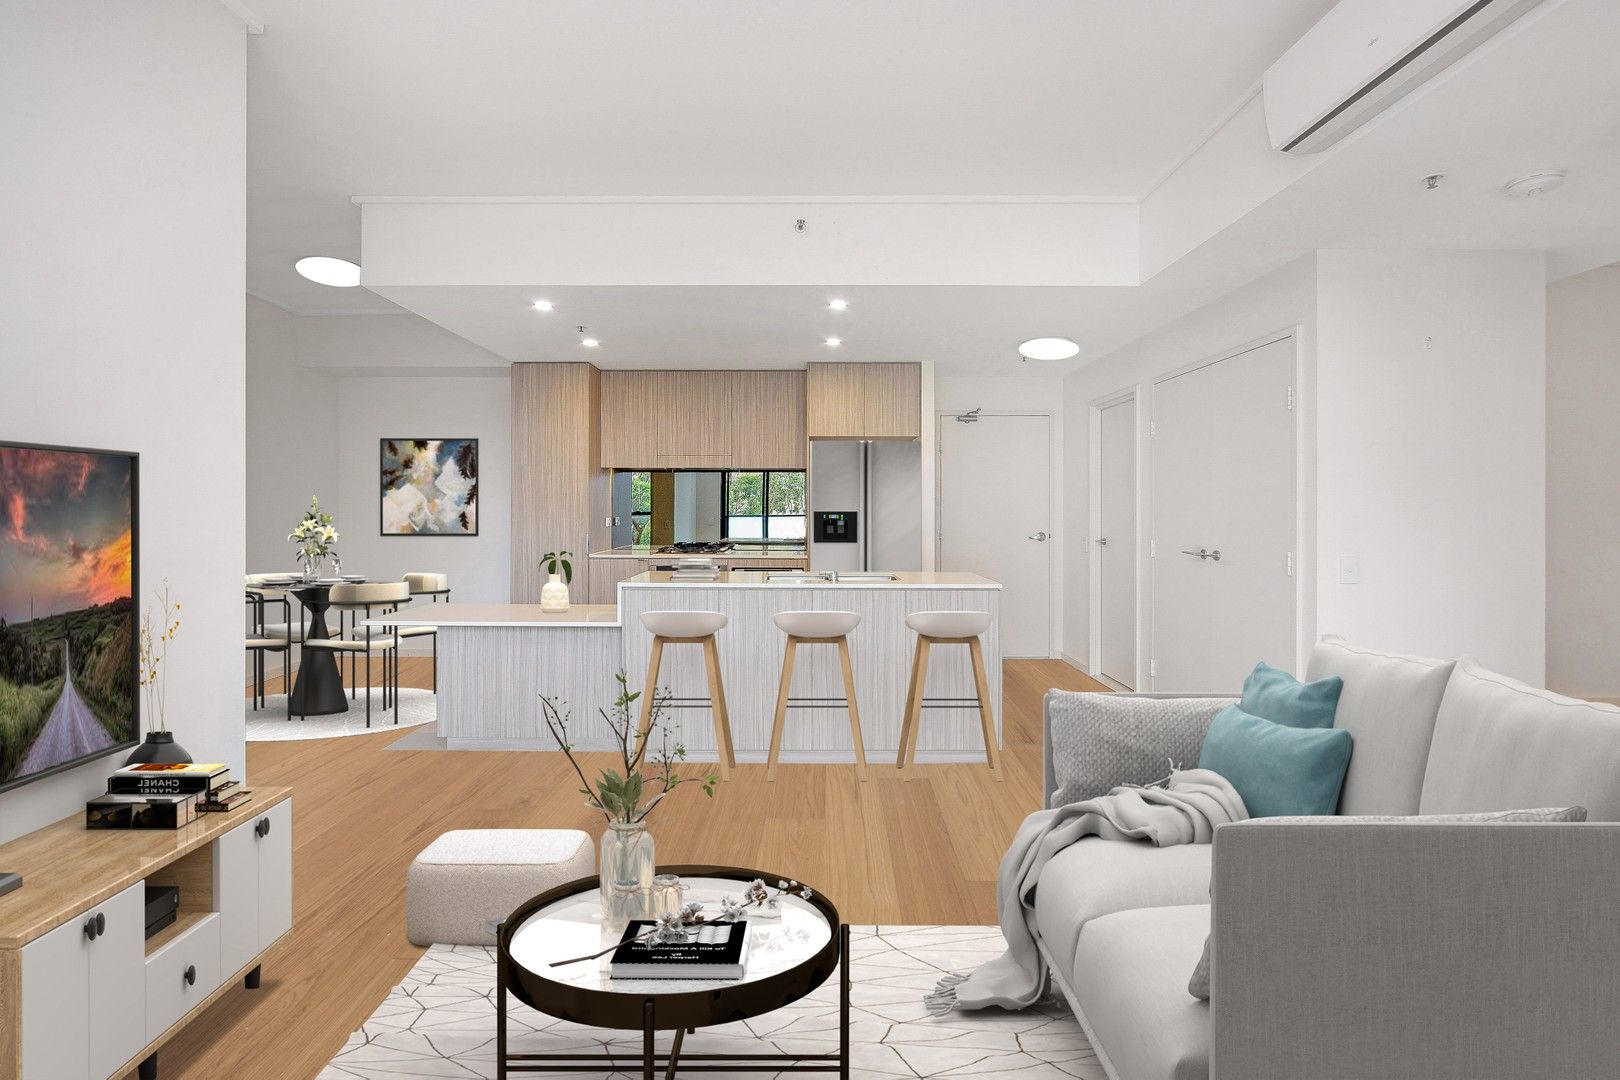 2 bedrooms Apartment / Unit / Flat in 605/7 Washington Avenue RIVERWOOD NSW, 2210